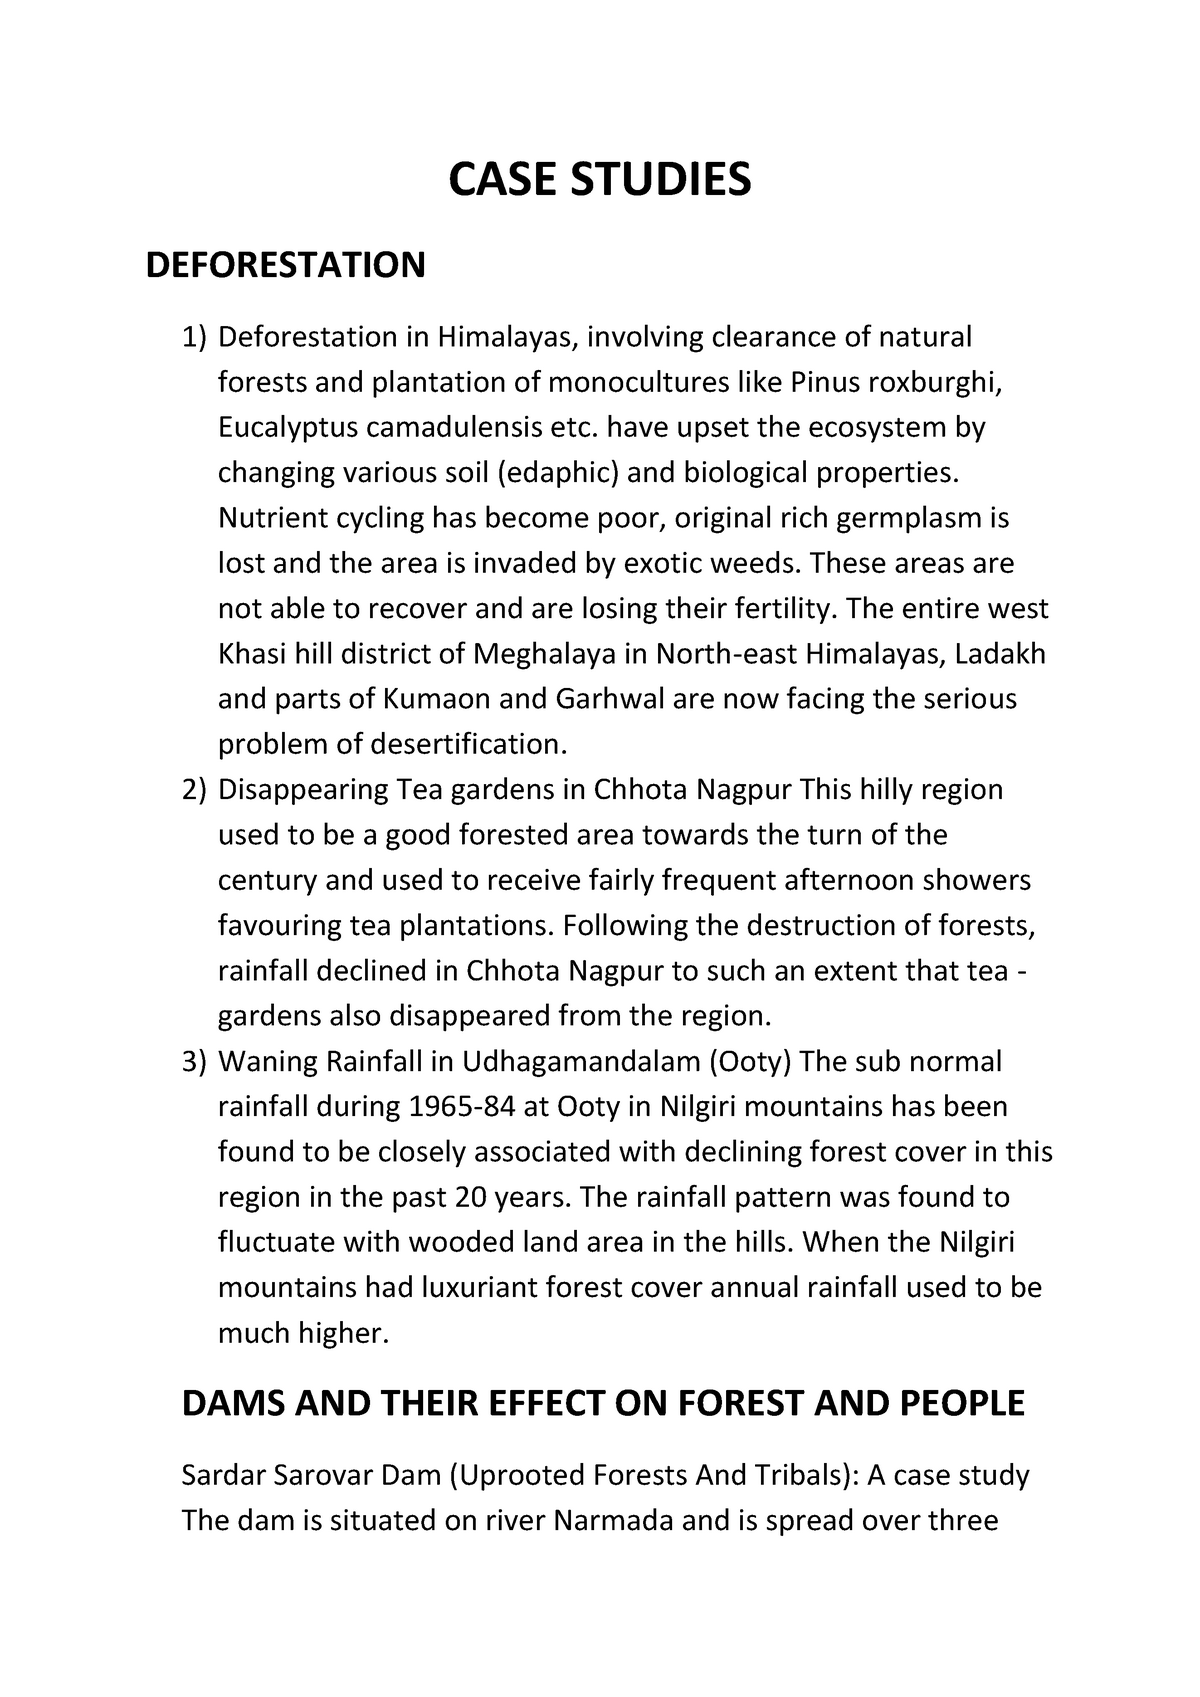 short case study on deforestation